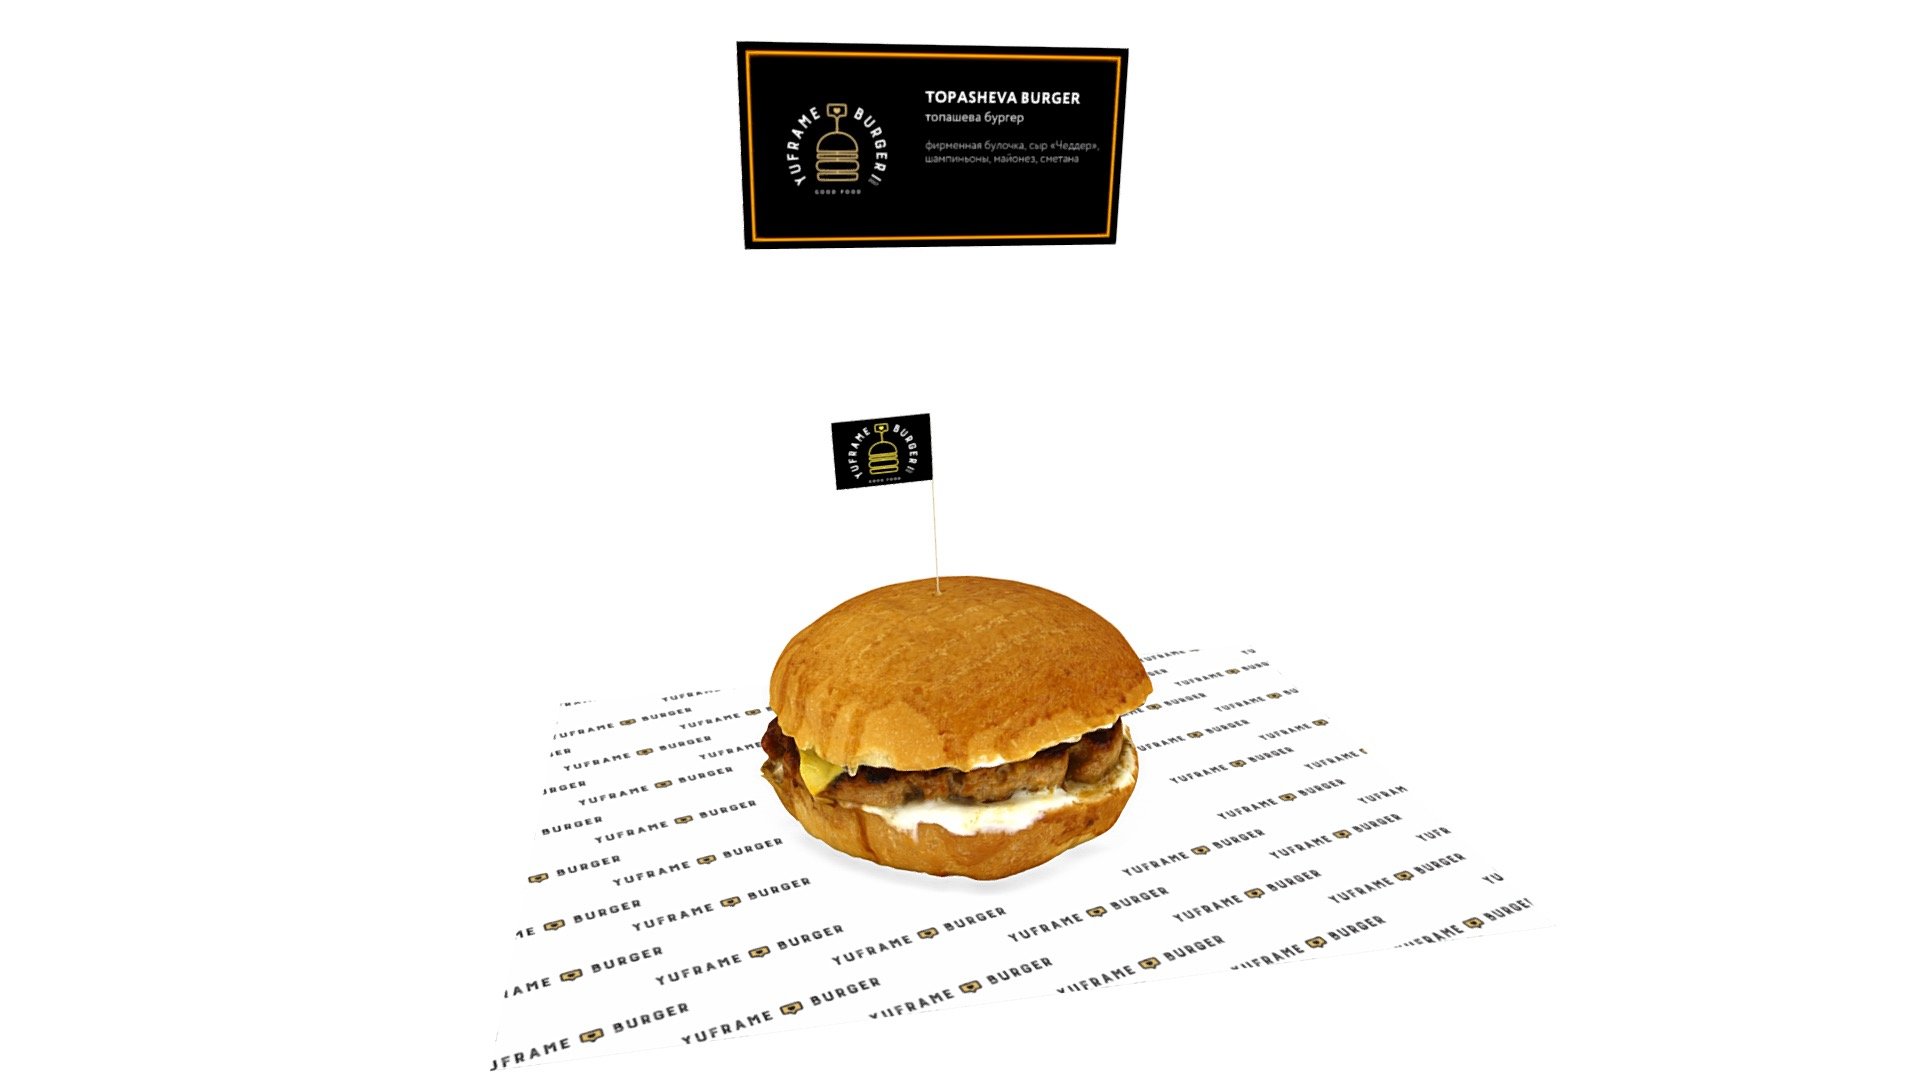 Yuframe Burger — Topasheva Burger